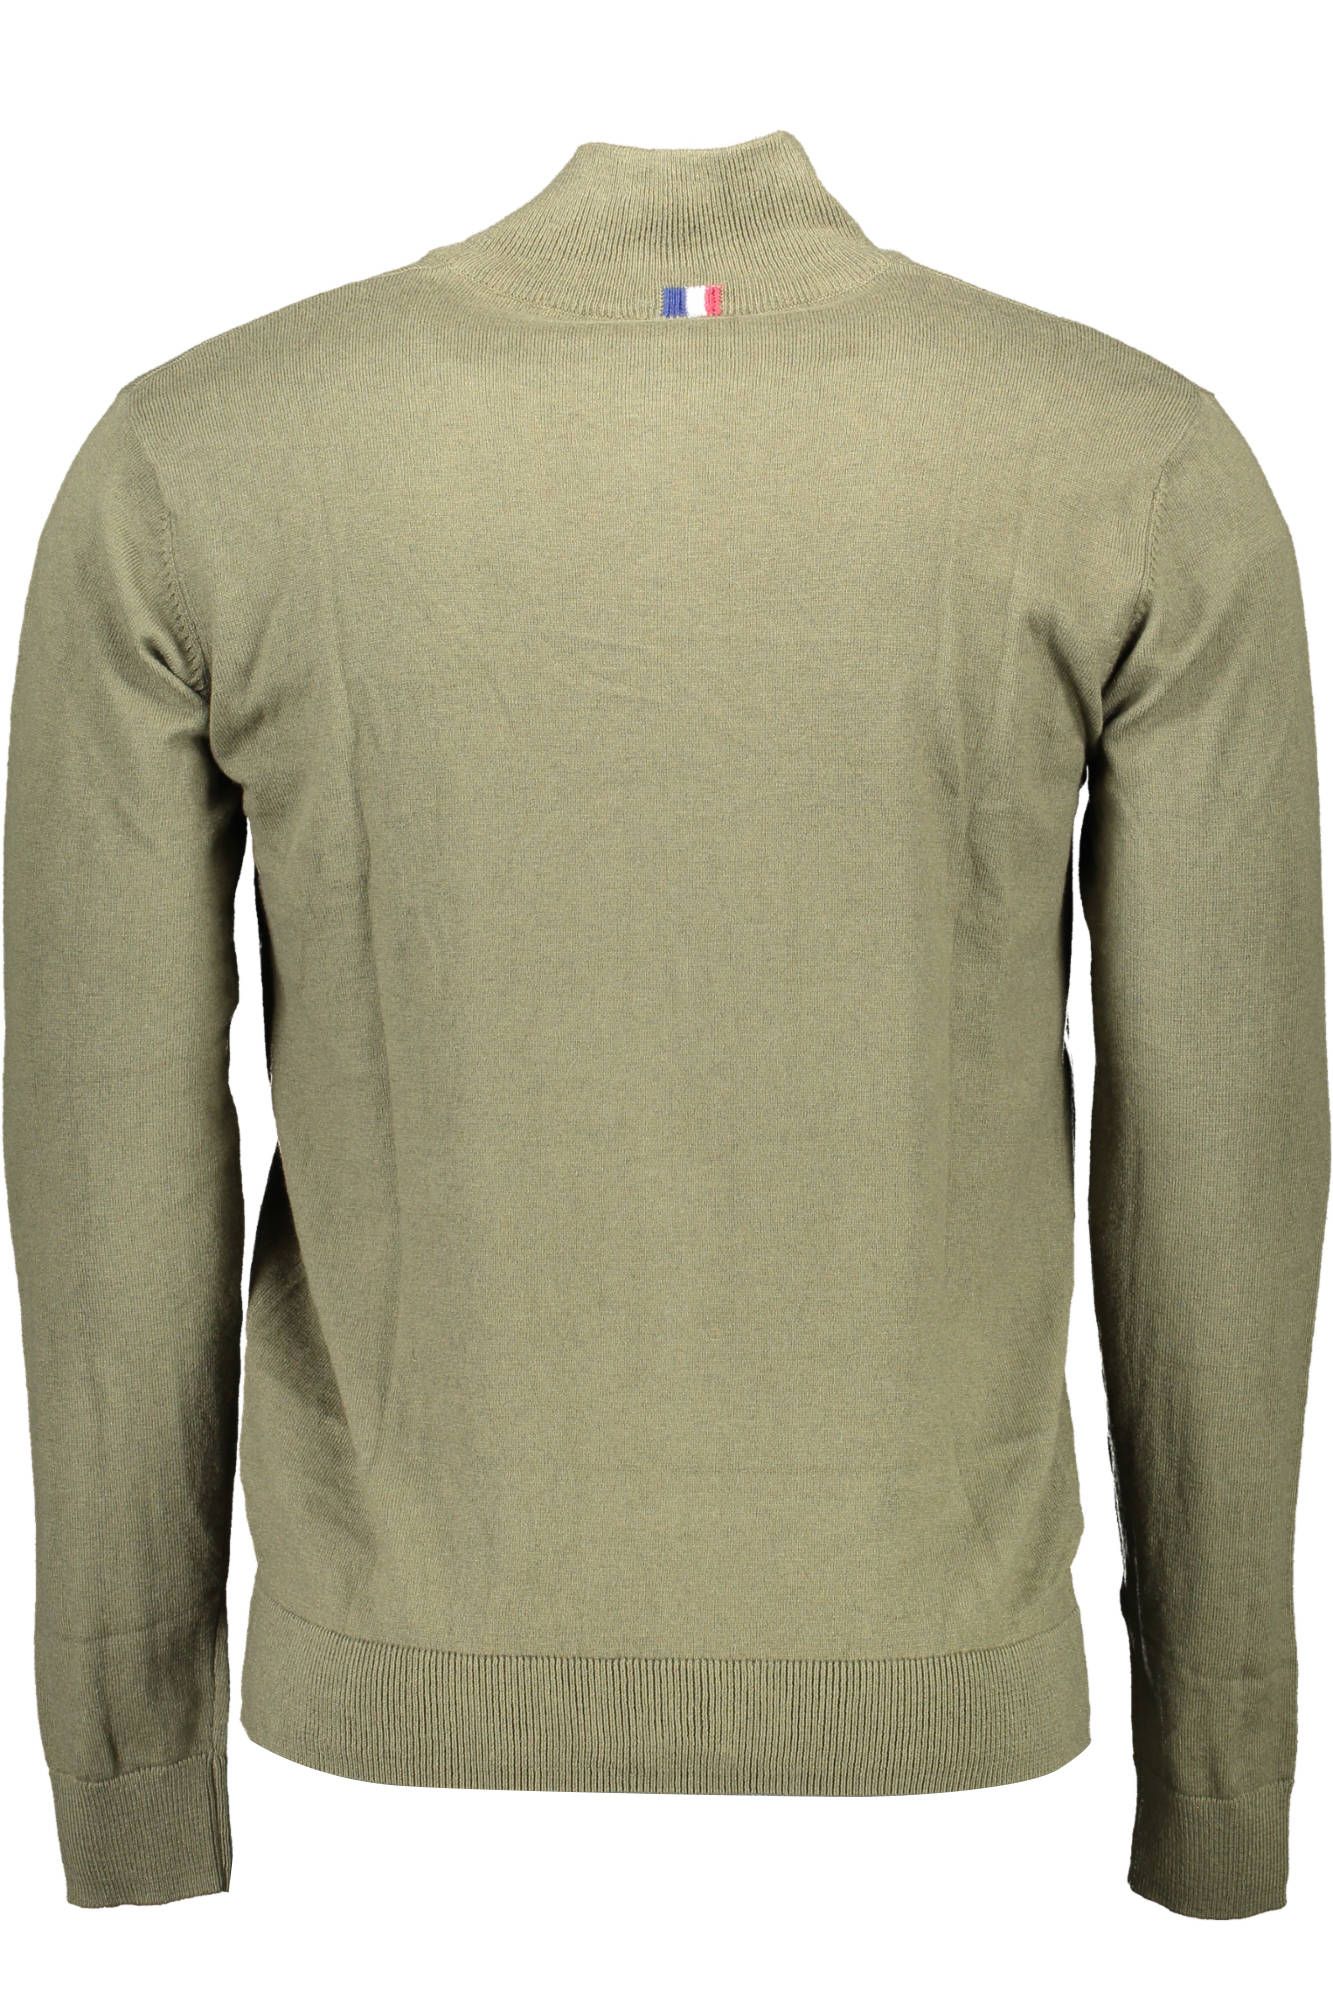 U.S. Polo Assn. Green Cotton Sweater